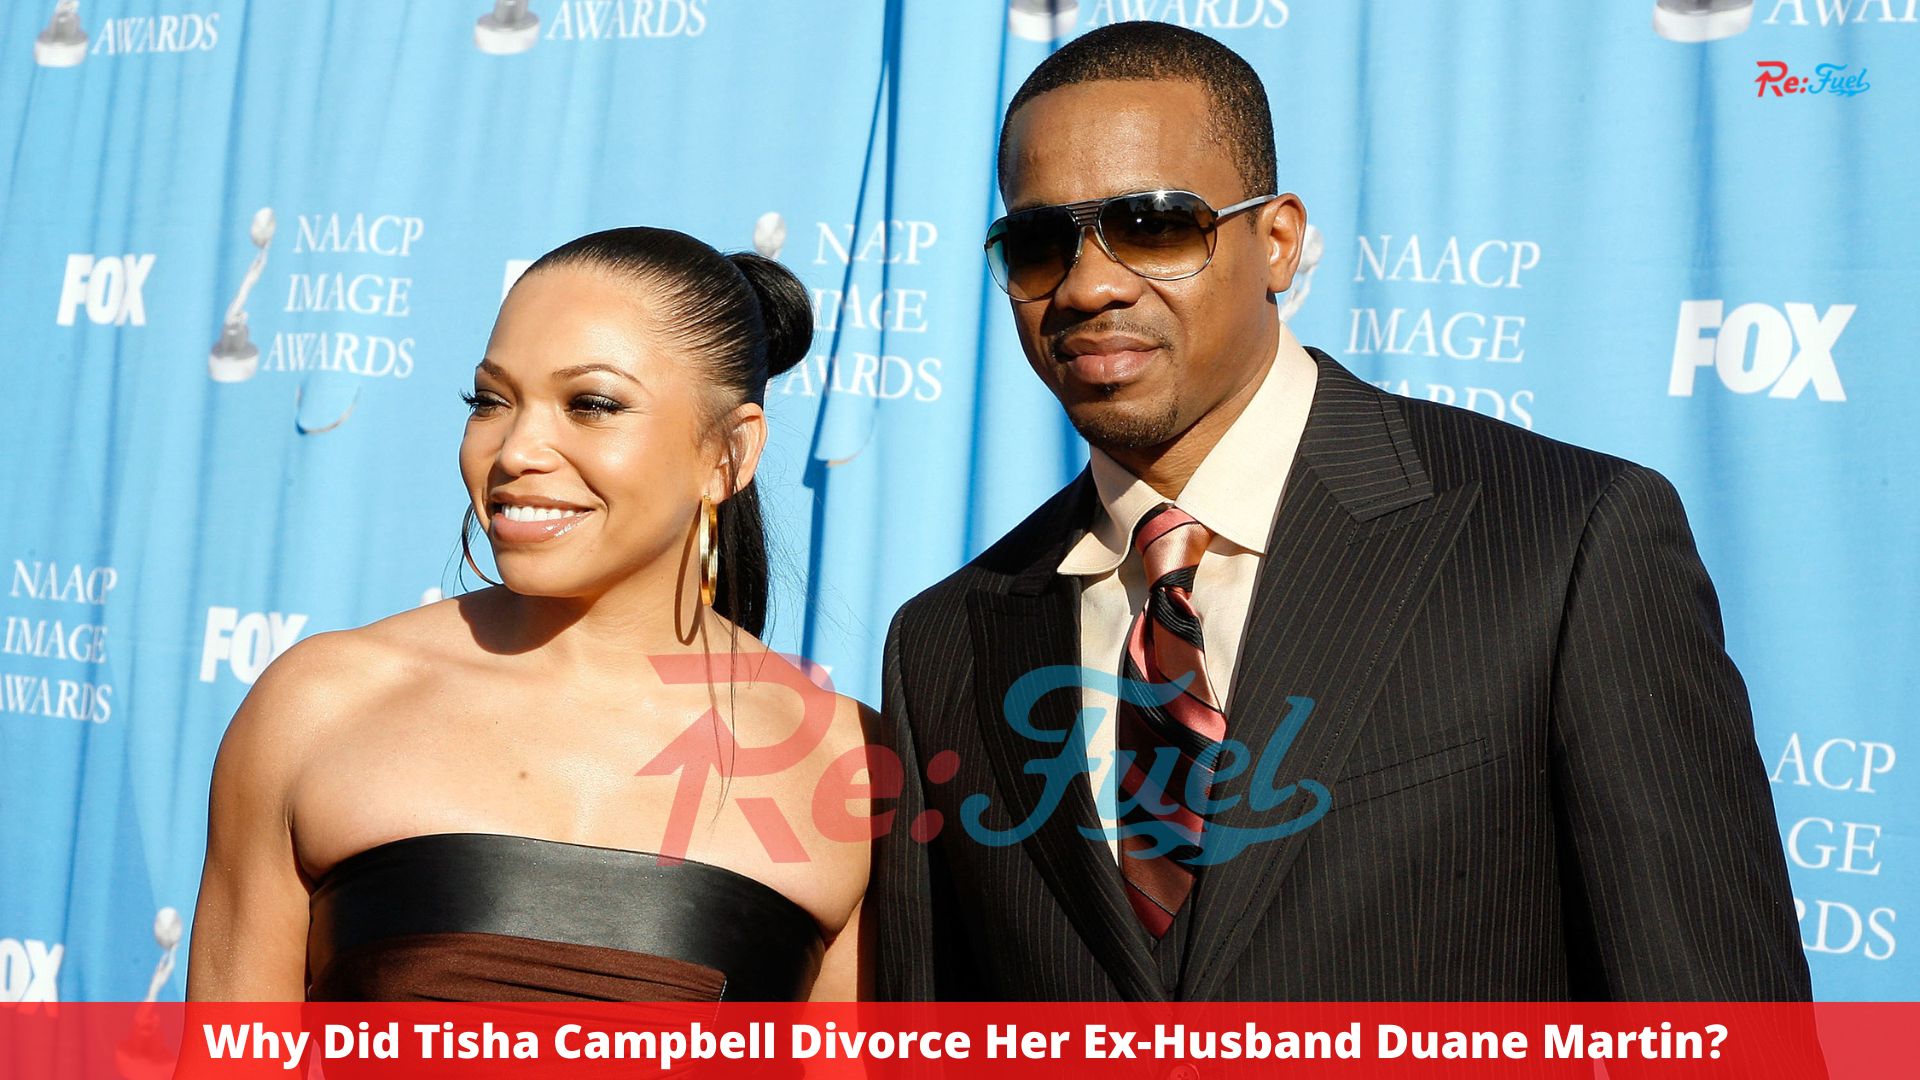 Why Did Tisha Campbell Divorce Her Ex-Husband Duane Martin?